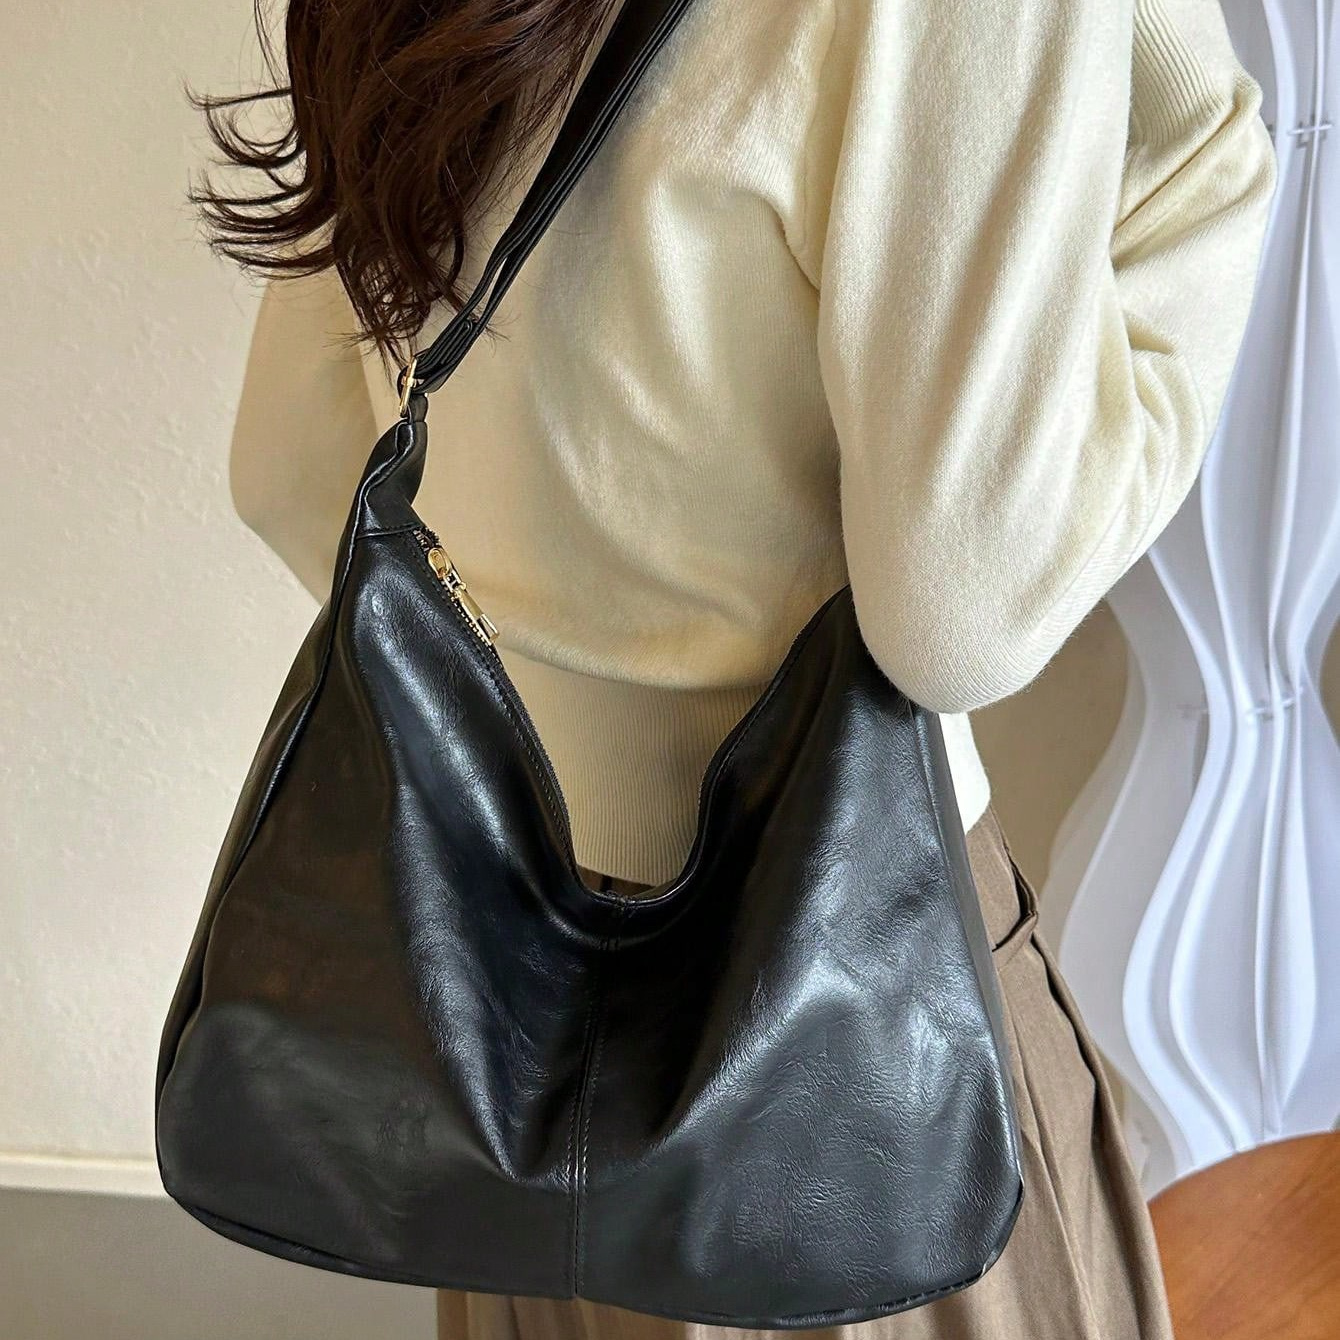 

Women's Pu Leather Handbag, Elegant Solid Color Shoulder Tote With Large Capacity, Fashionable Retro Textured Handbag